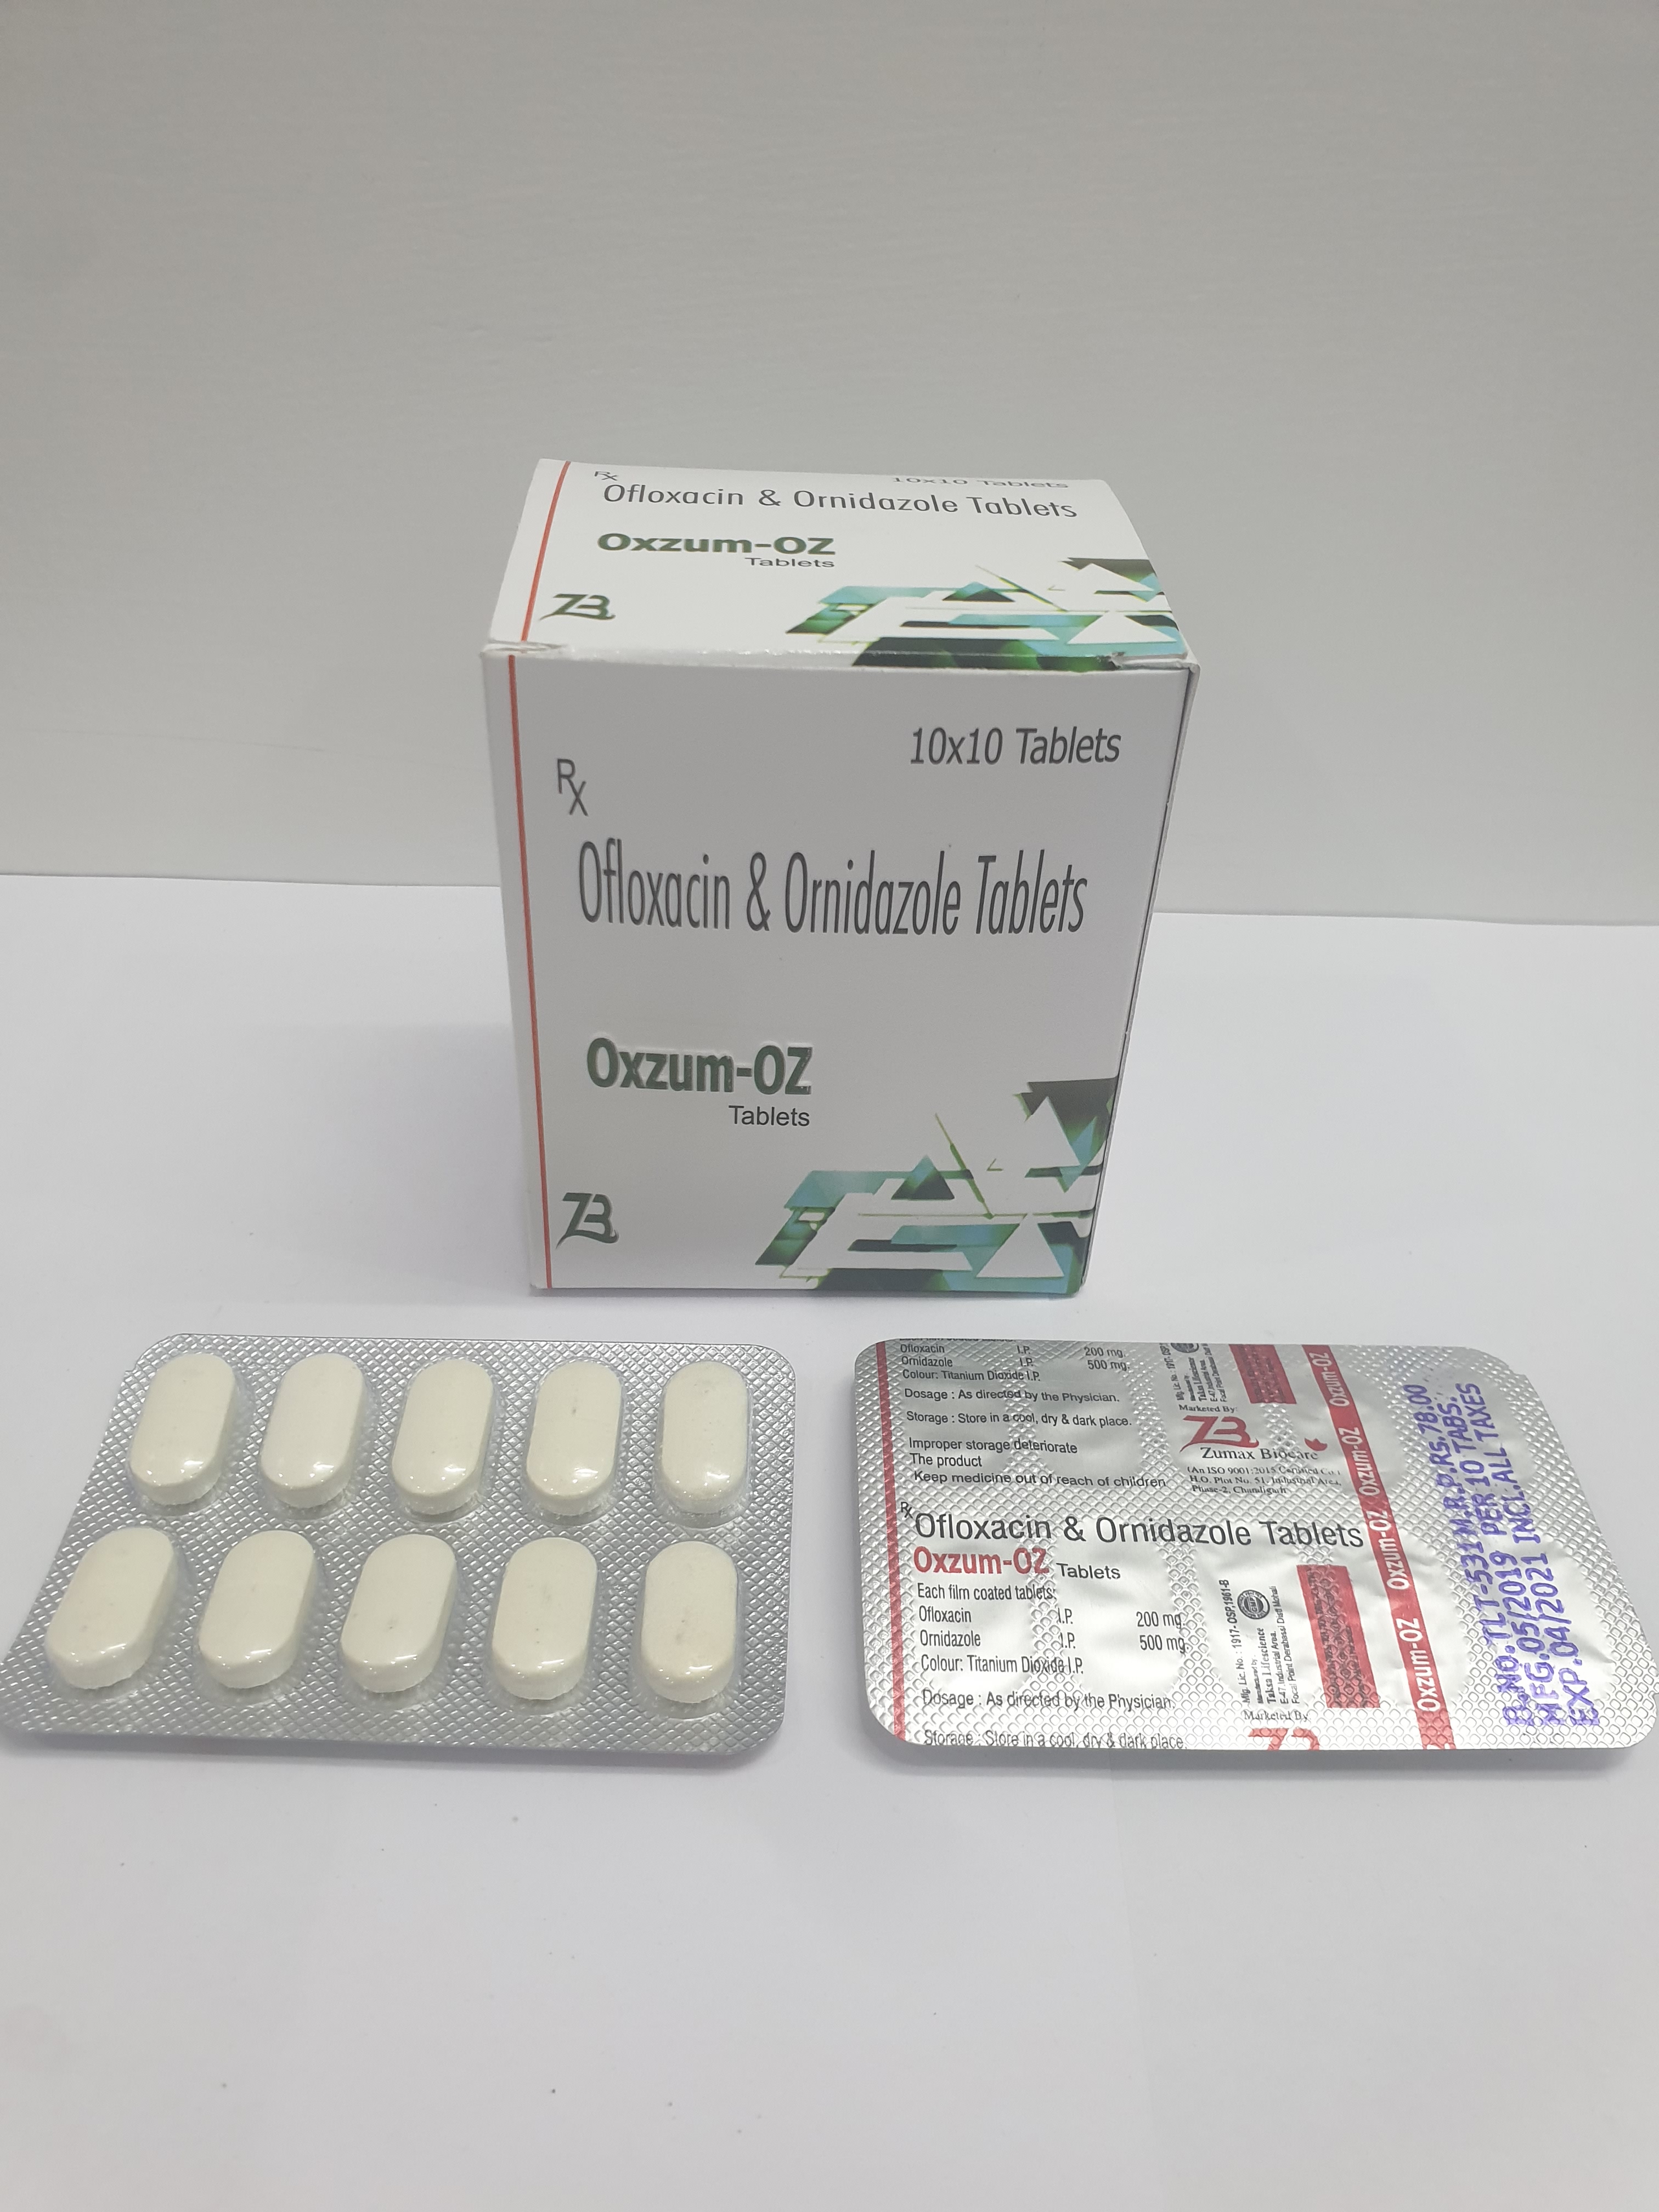 Product Name: Oxzum OZ, Compositions of Oxzum OZ are Ofloxacin & Ornidazole Tablets - Zumax Biocare